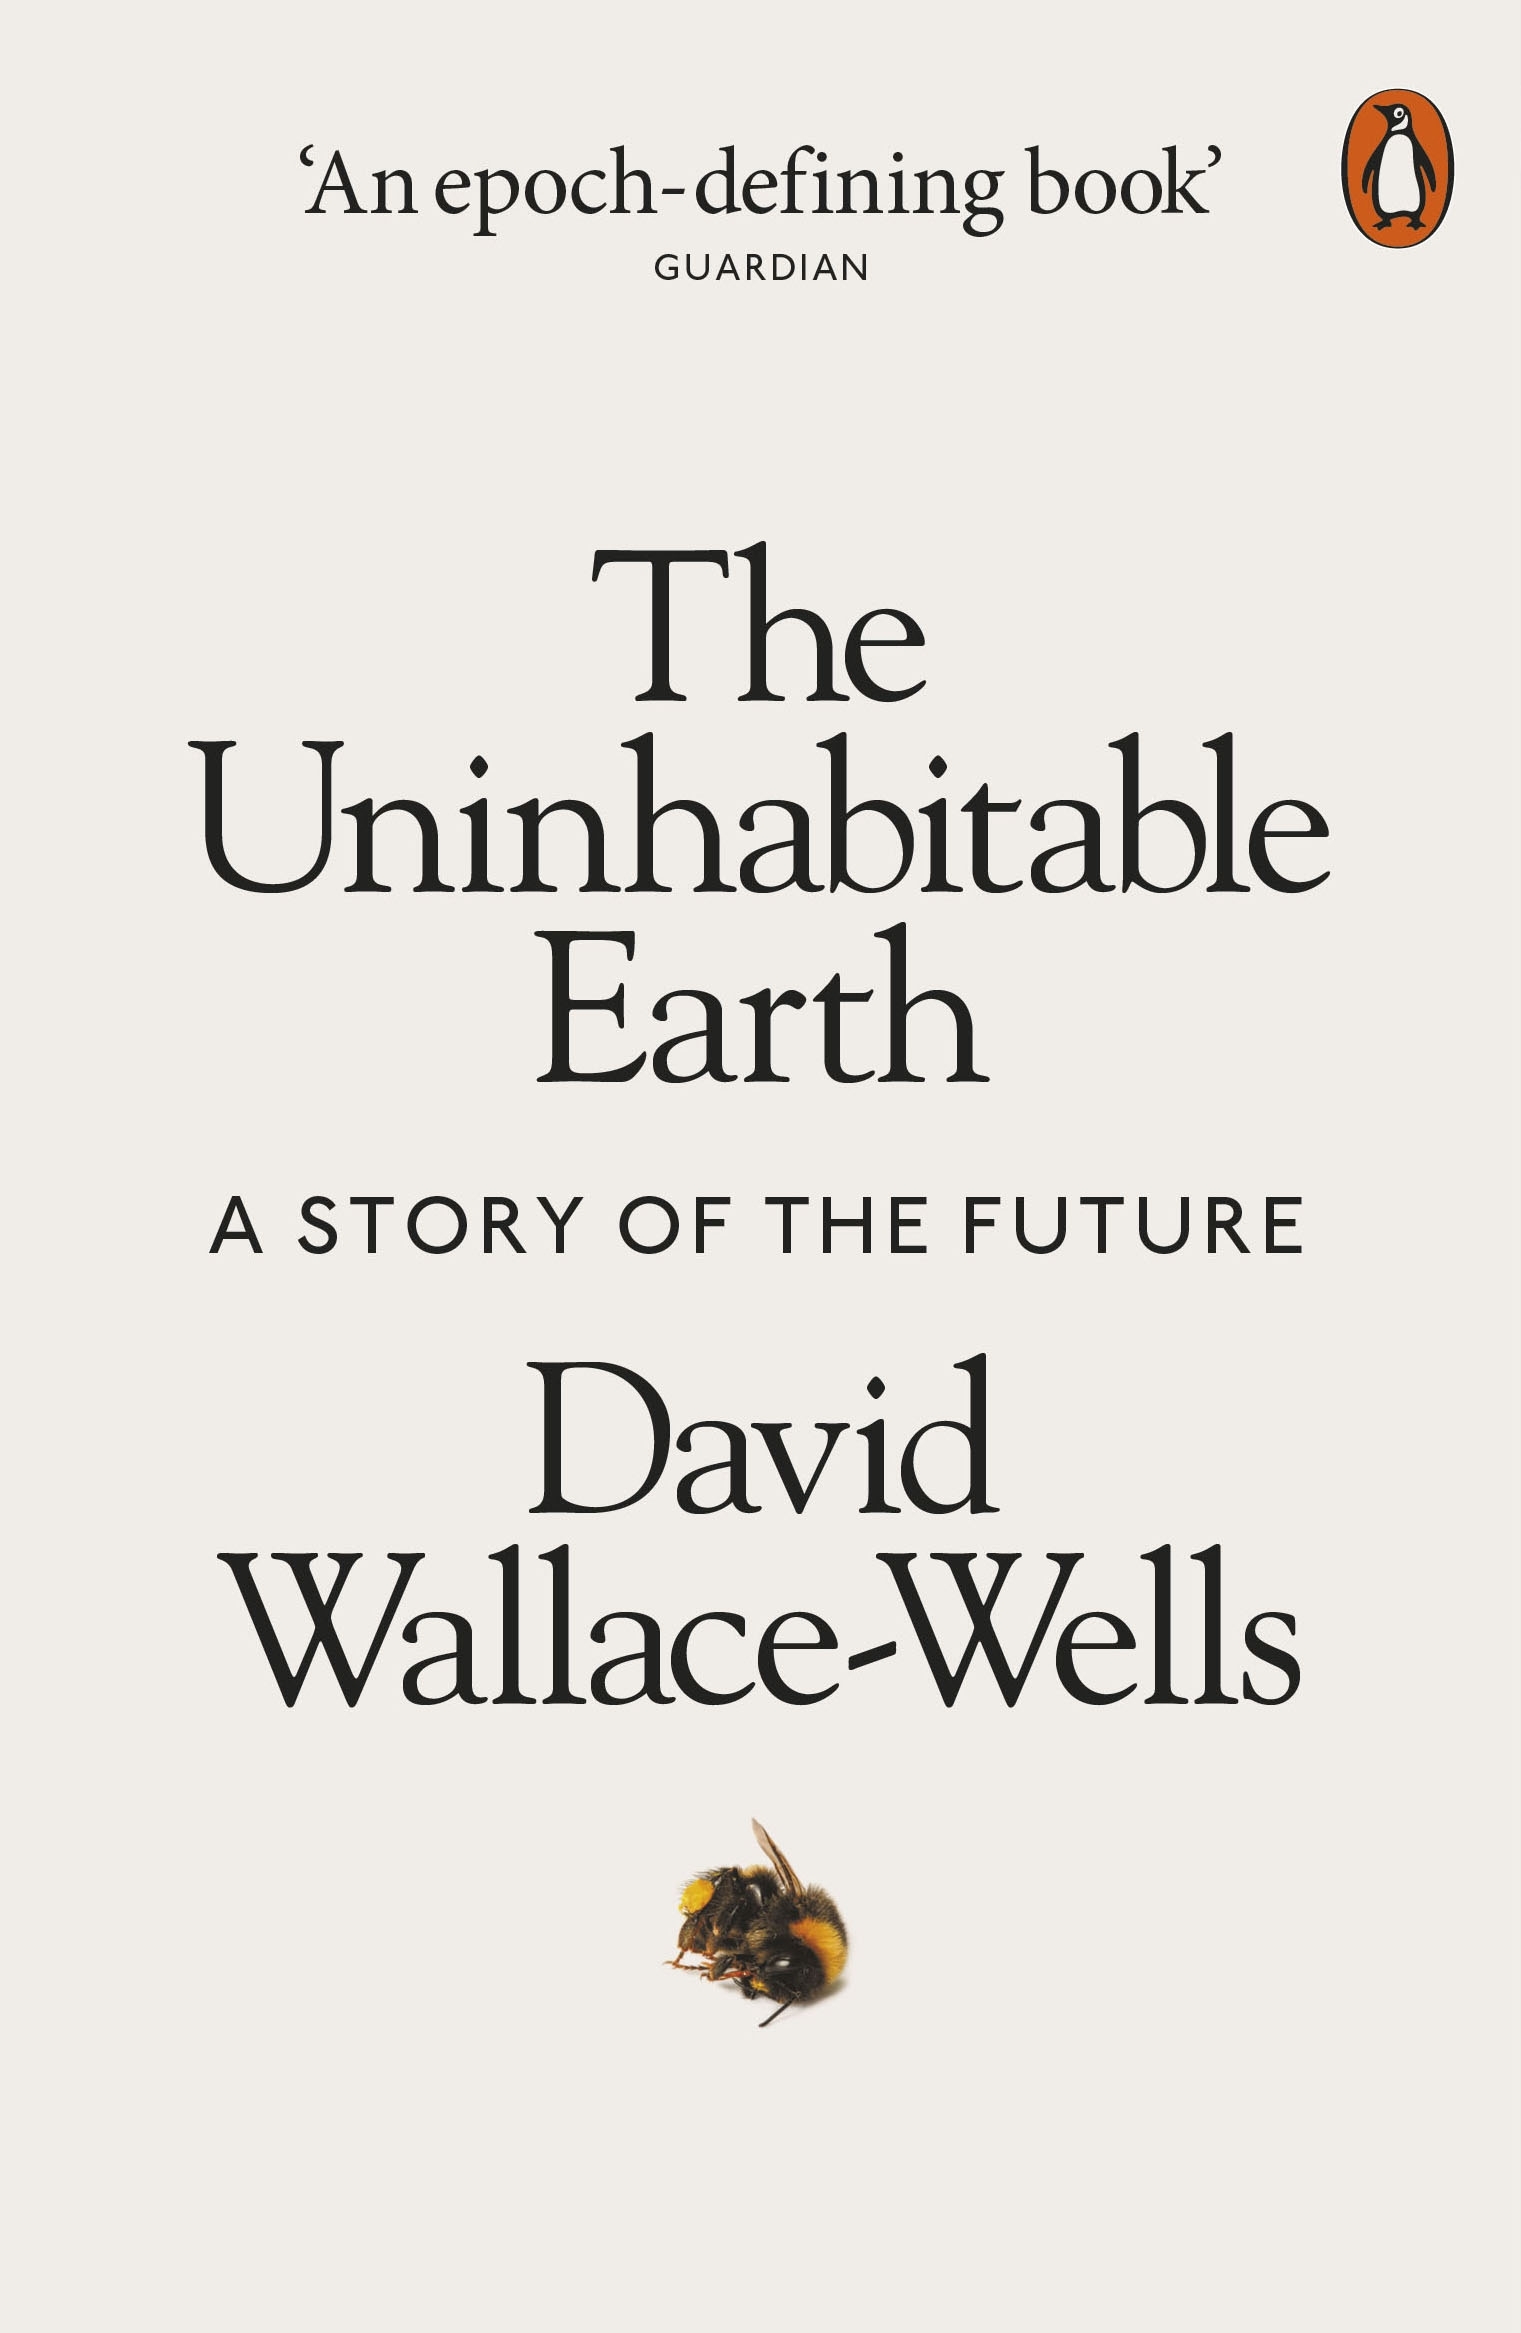 The Uninhabitable Earth by David Wallace-Wells - Penguin Books Australia Climate Change Books